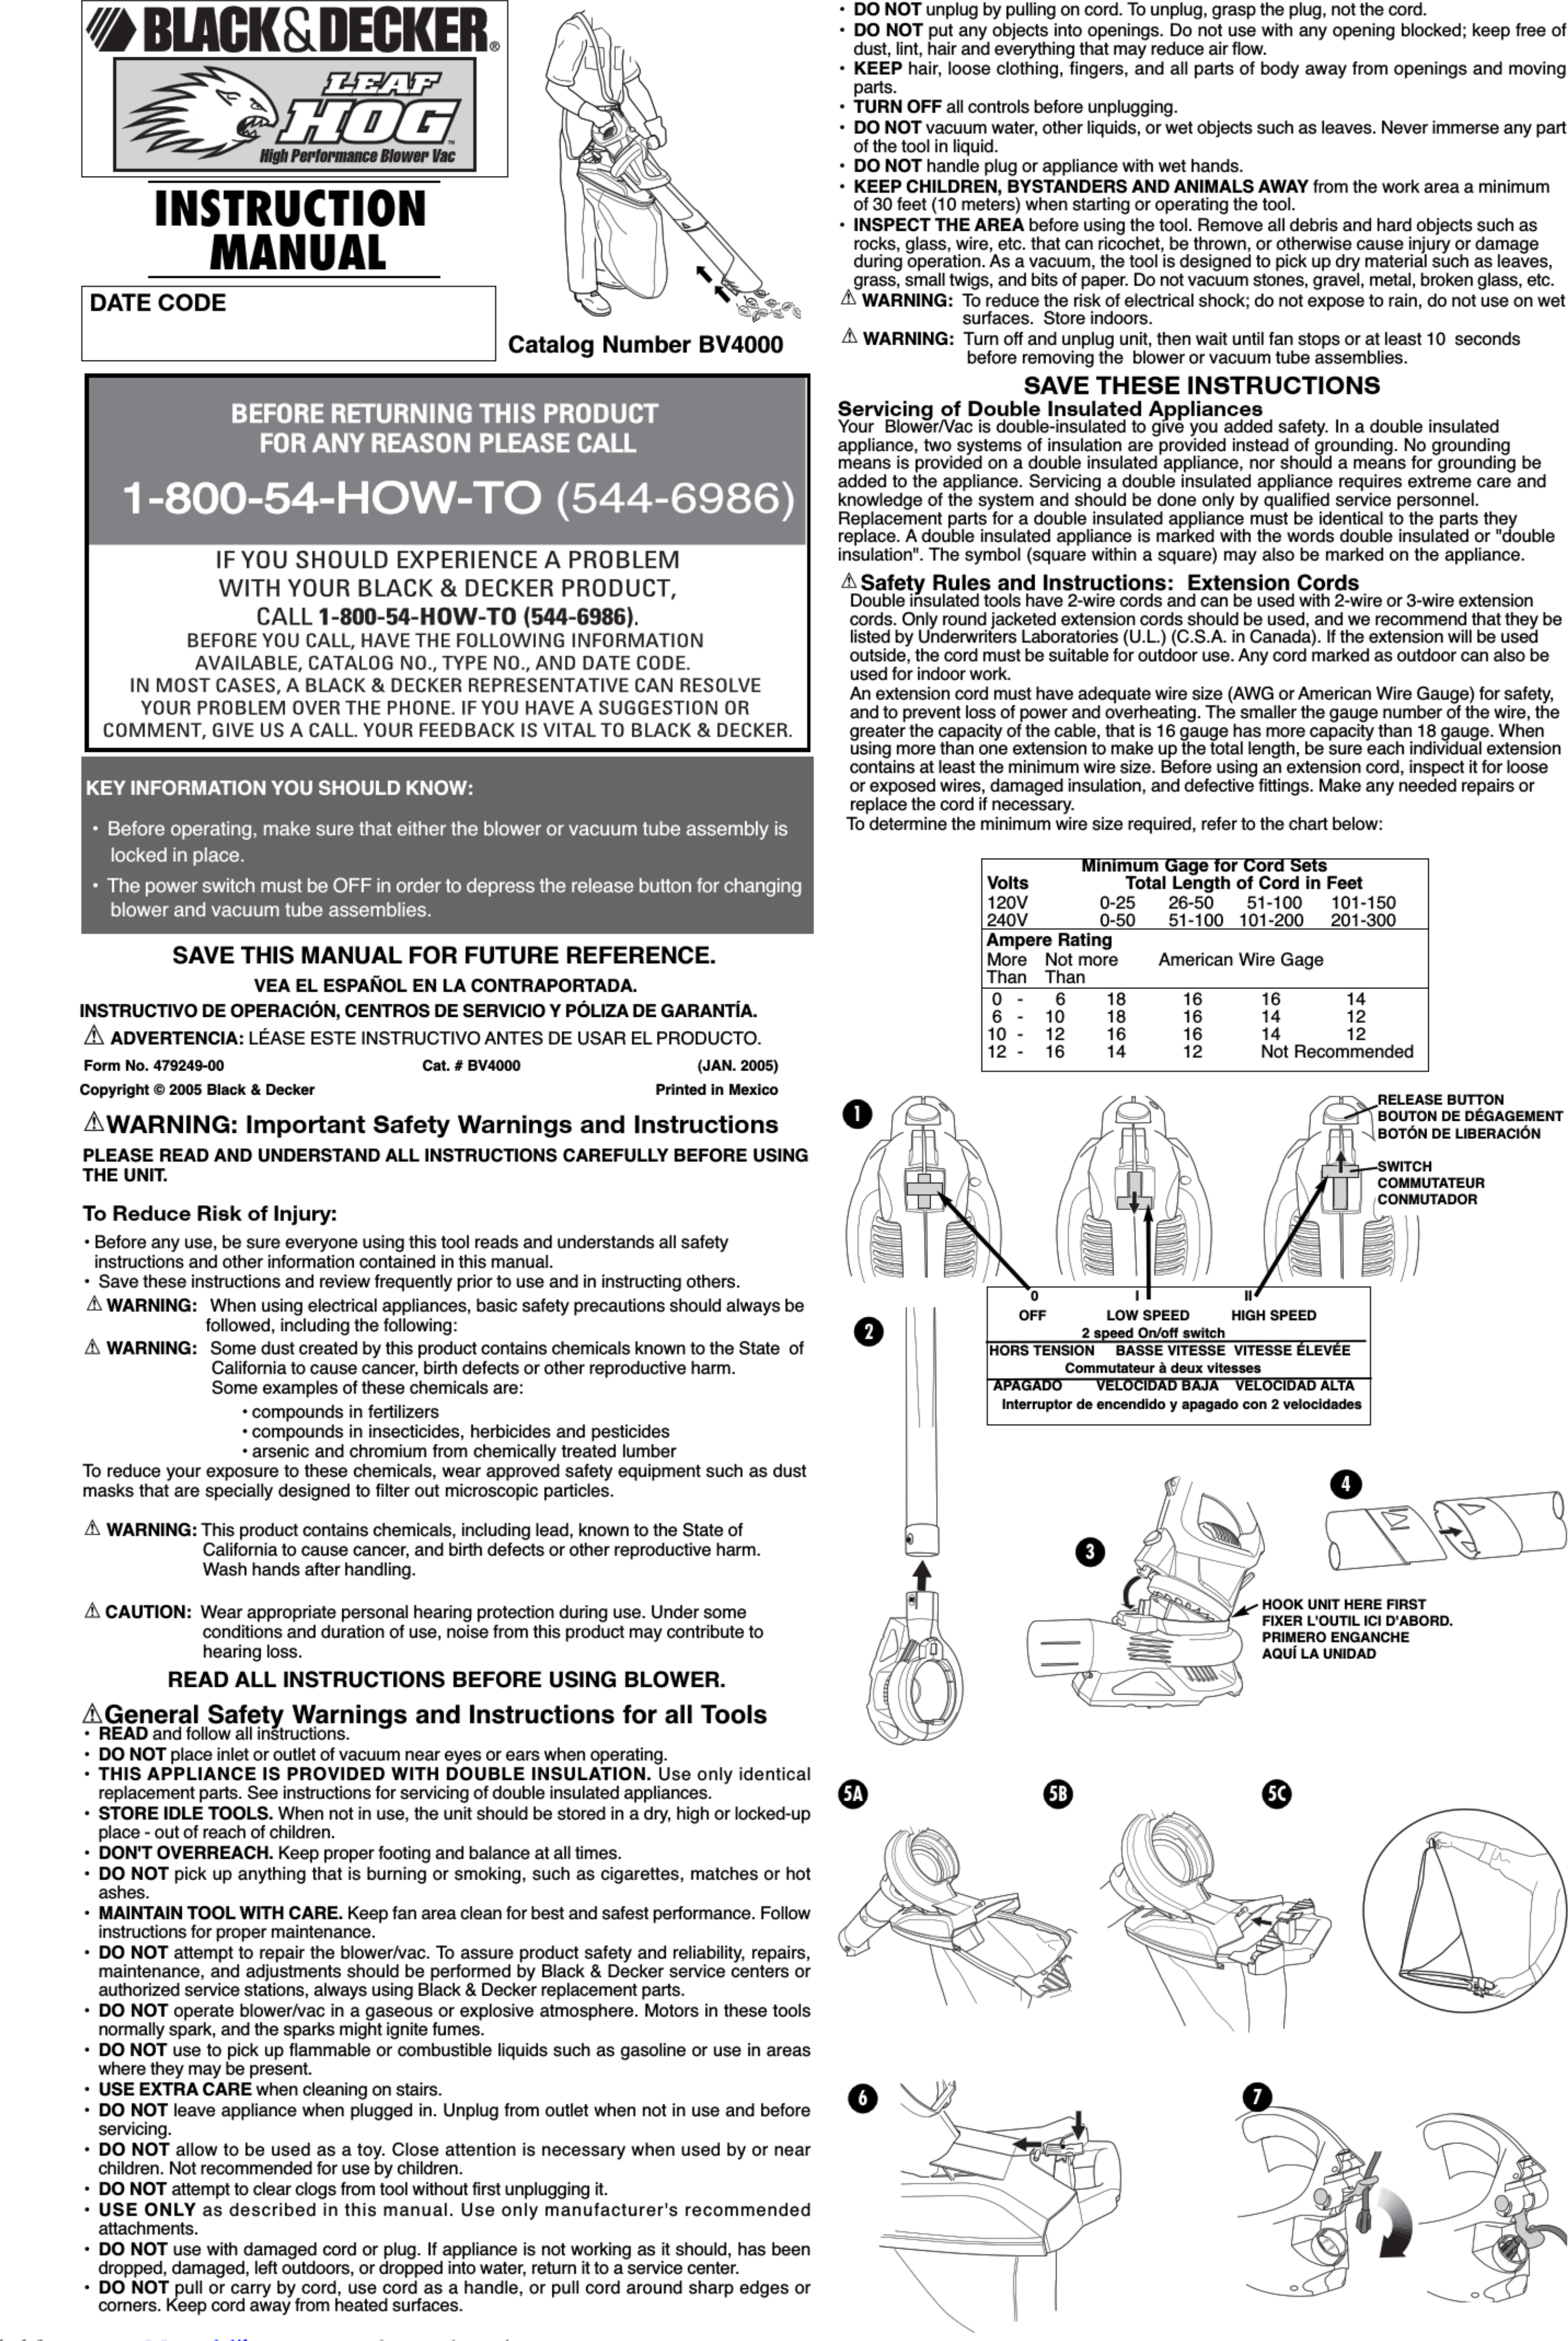 Page 1 of 5 - Black-And-Decker Black-And-Decker-Leaf-Hog-Bv4000-Instruction-Manual-1002745 User Manual